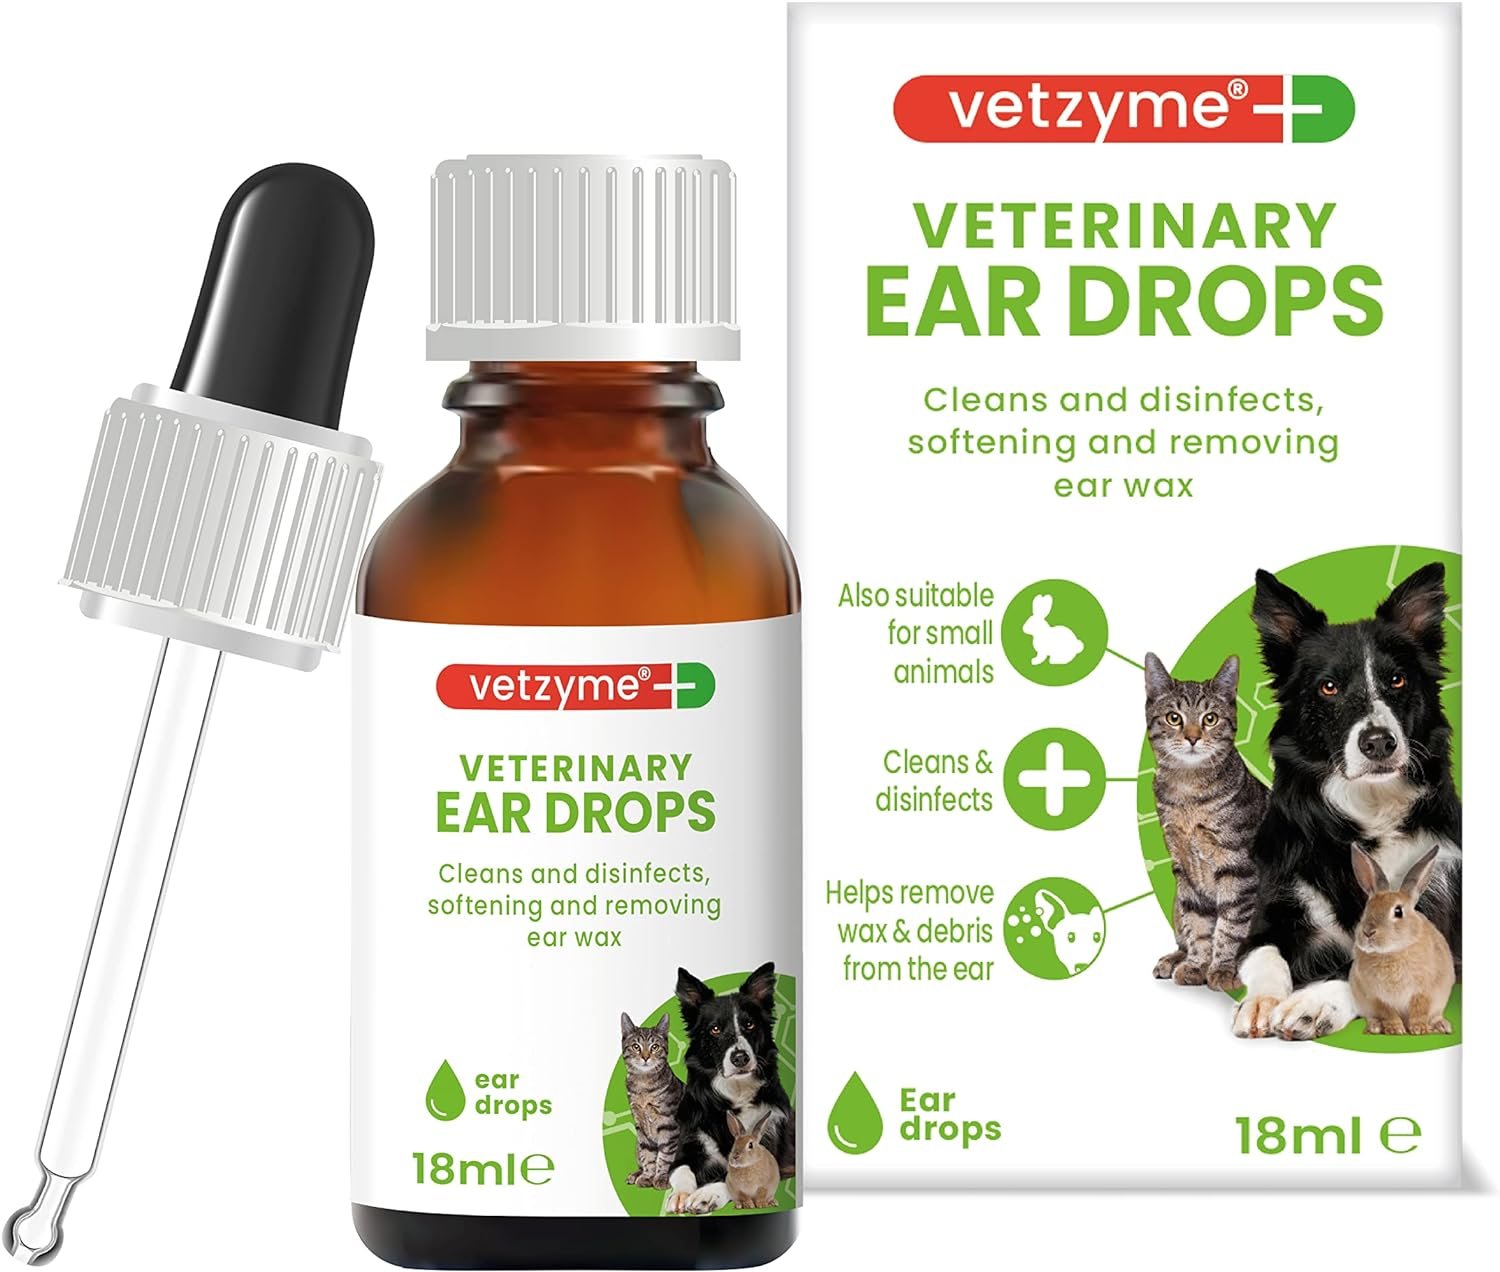 vetzyme ear drops review